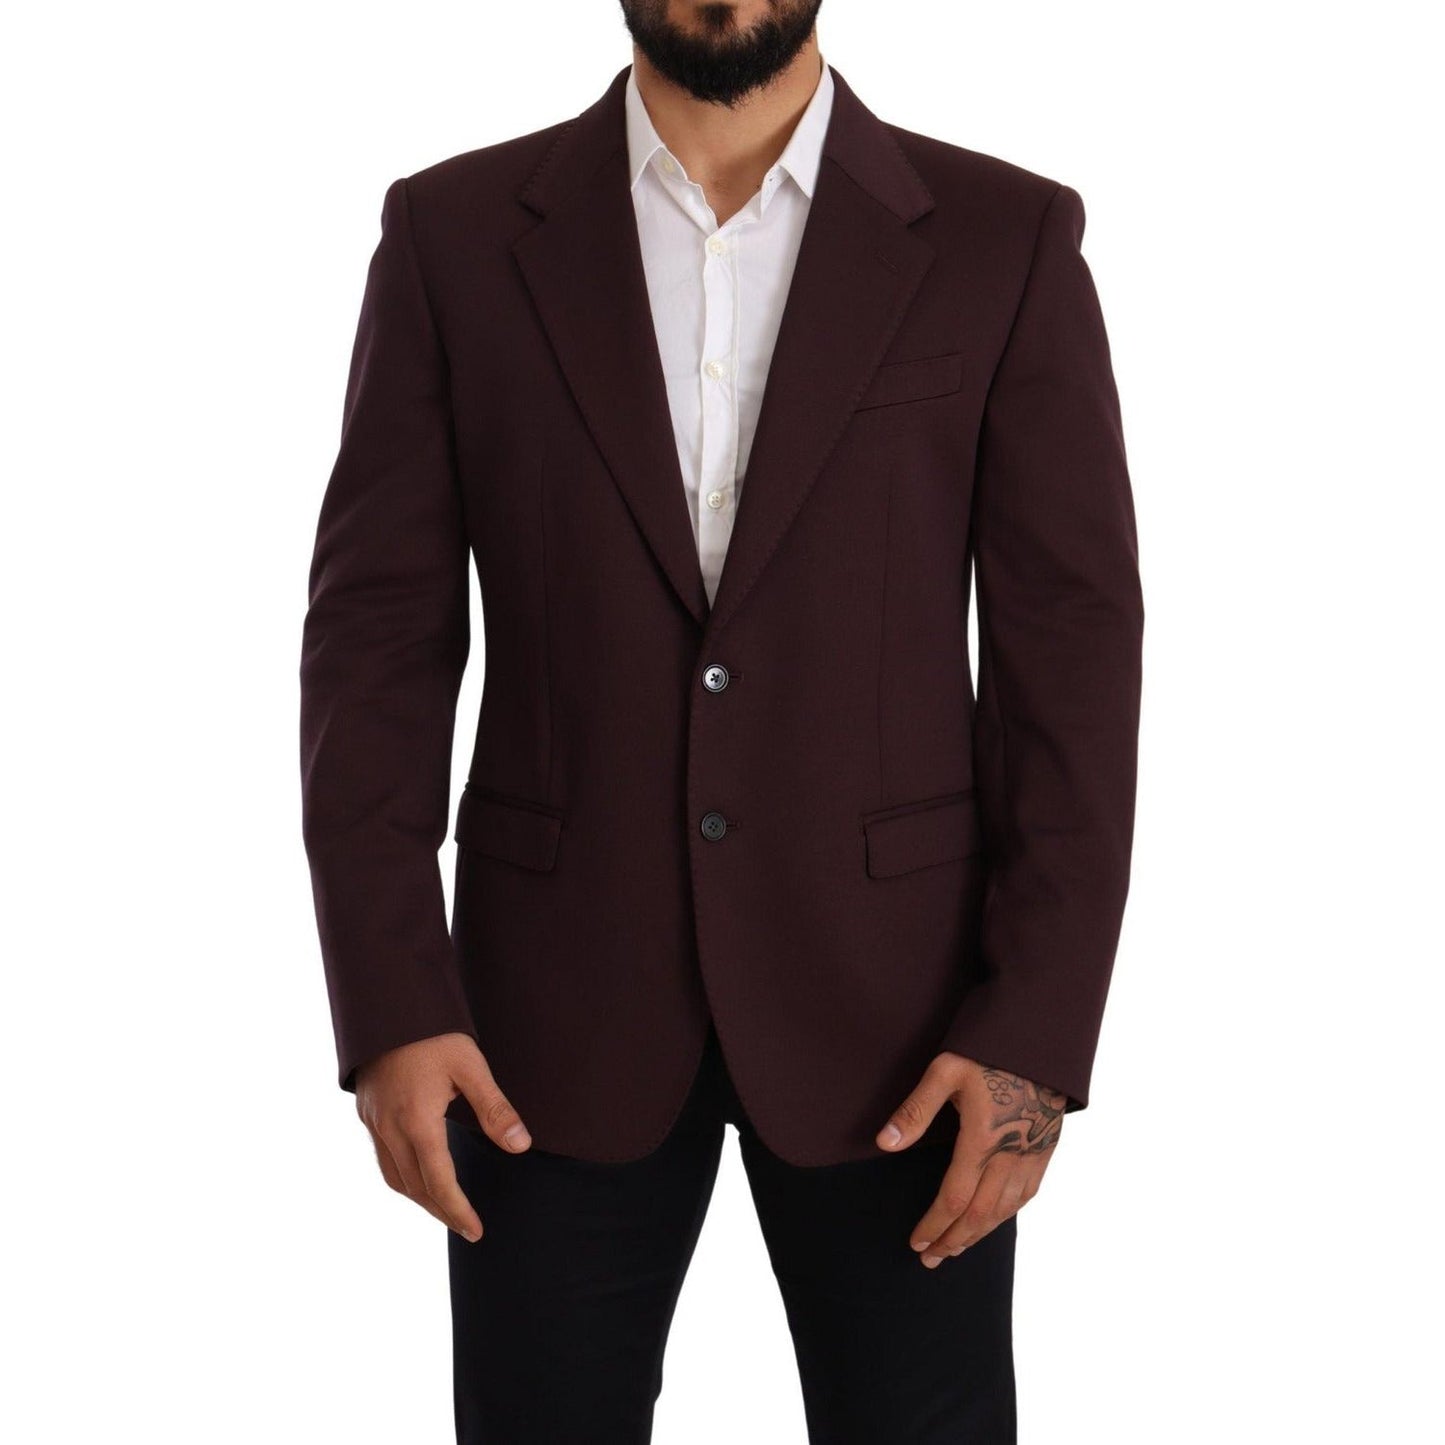 Dolce & Gabbana Elegant Indigo Slim Fit Blazer for Men purple-cotton-slim-blazer-jacket IMG_5267-scaled-e89e7336-655.jpg